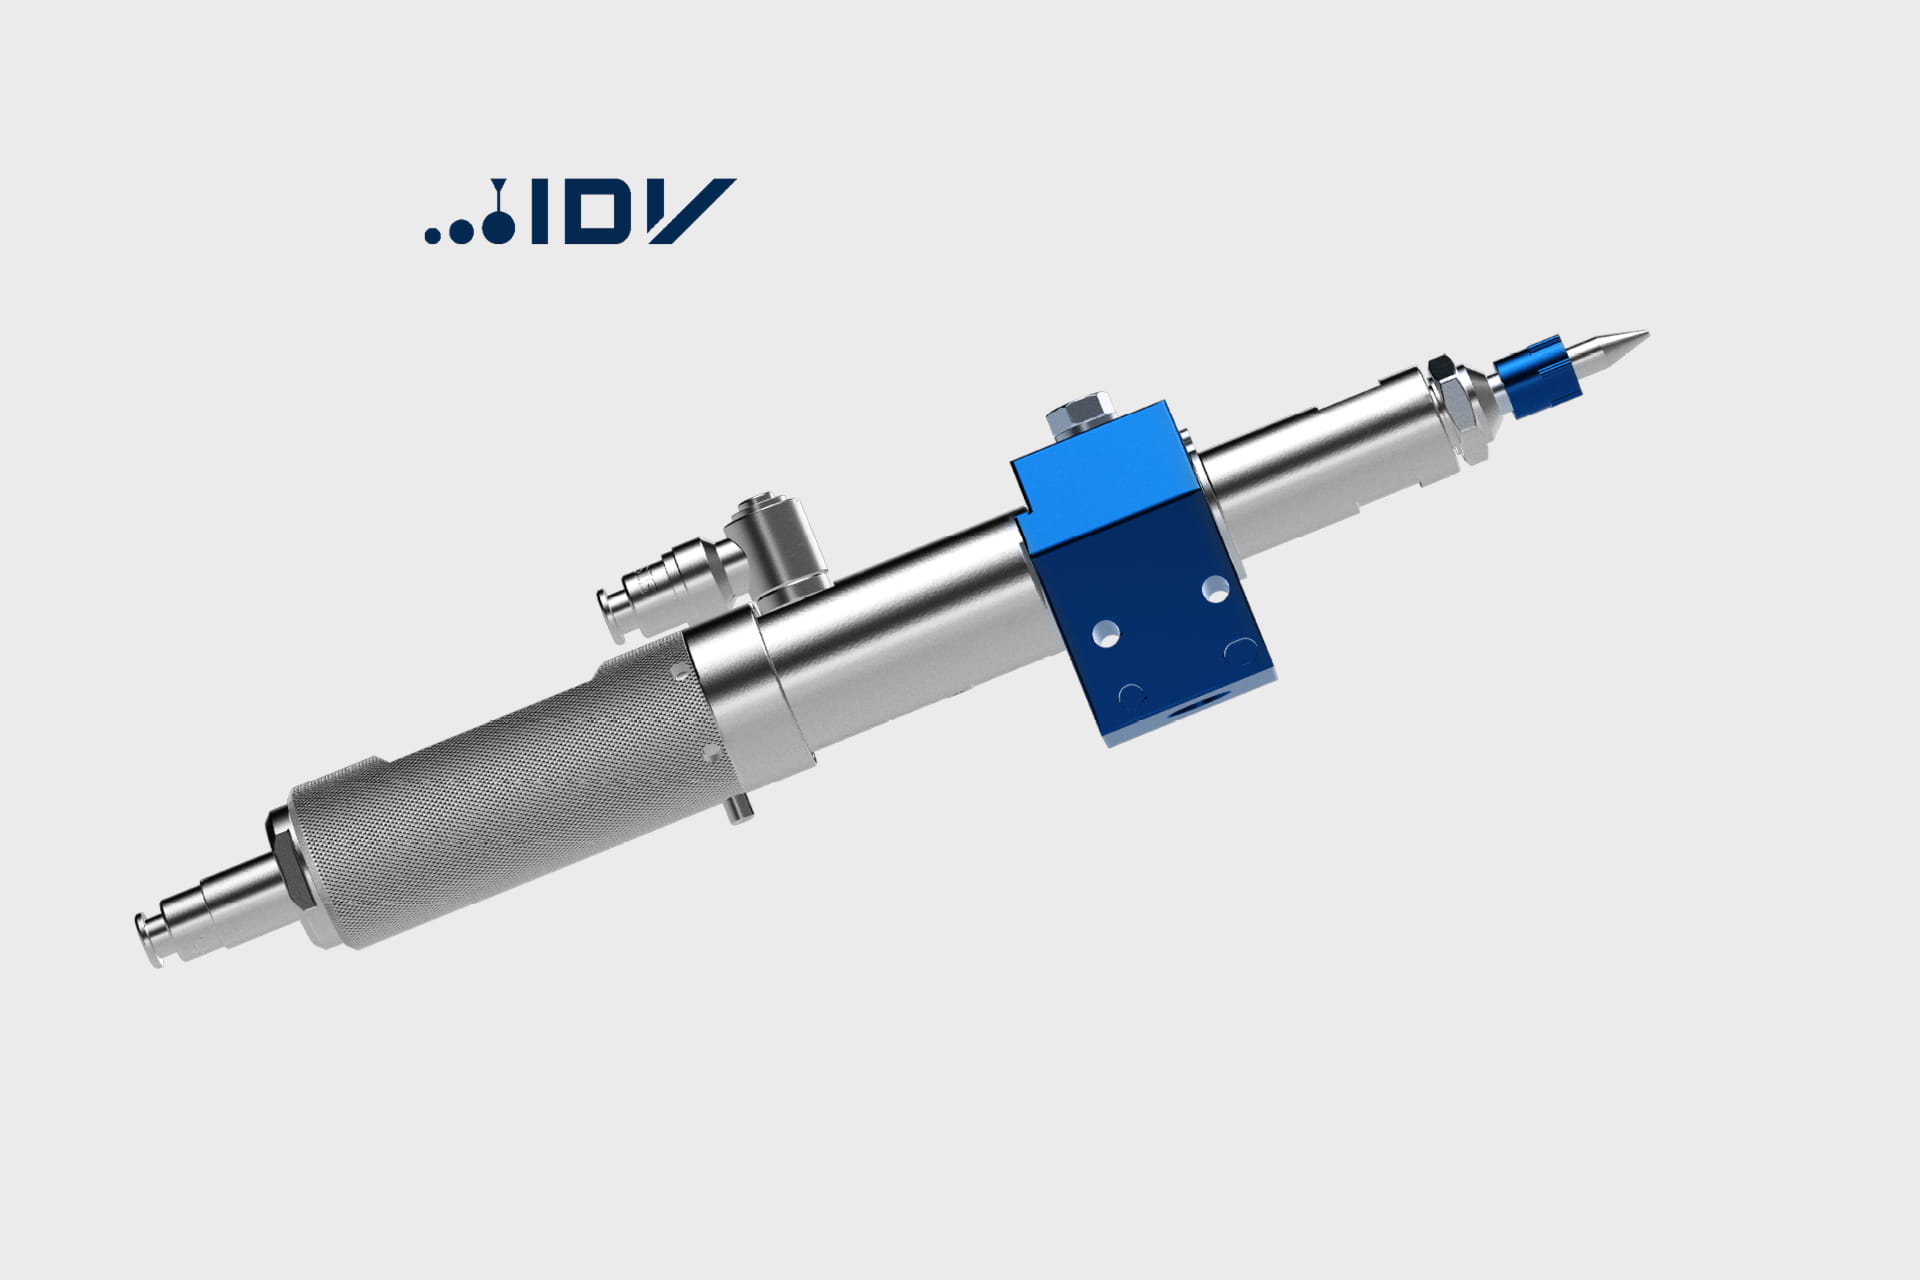 SOMA IDV – Impulse dosing valve